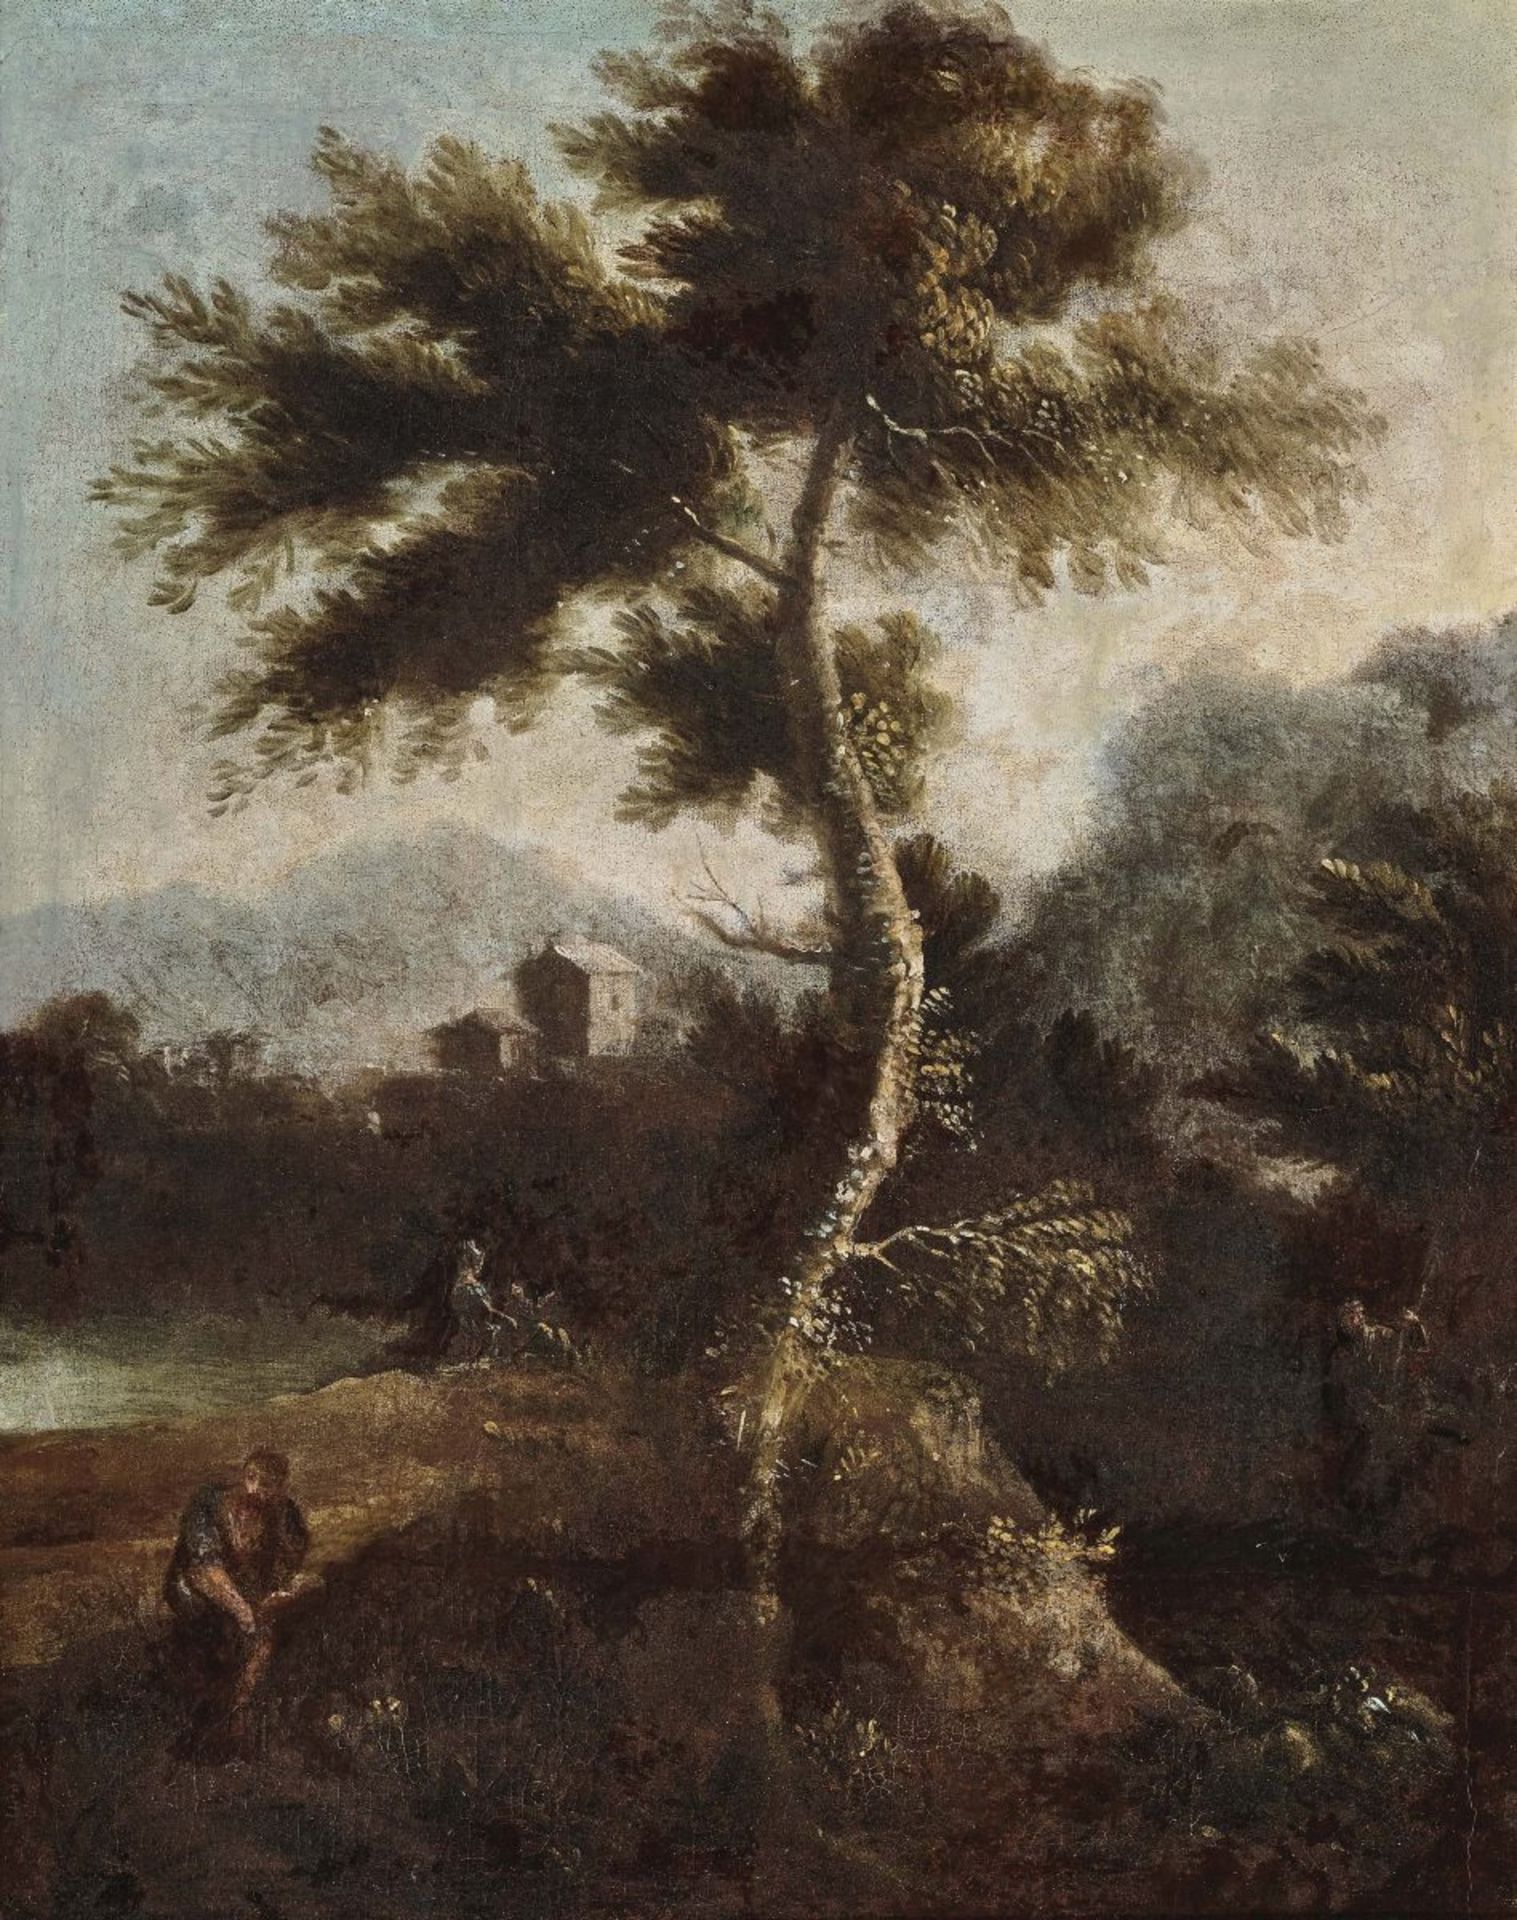 Italian School 17th centuryLandscape with Trees and Figure Scenery Oil on canvas. 63 x 50 cm.